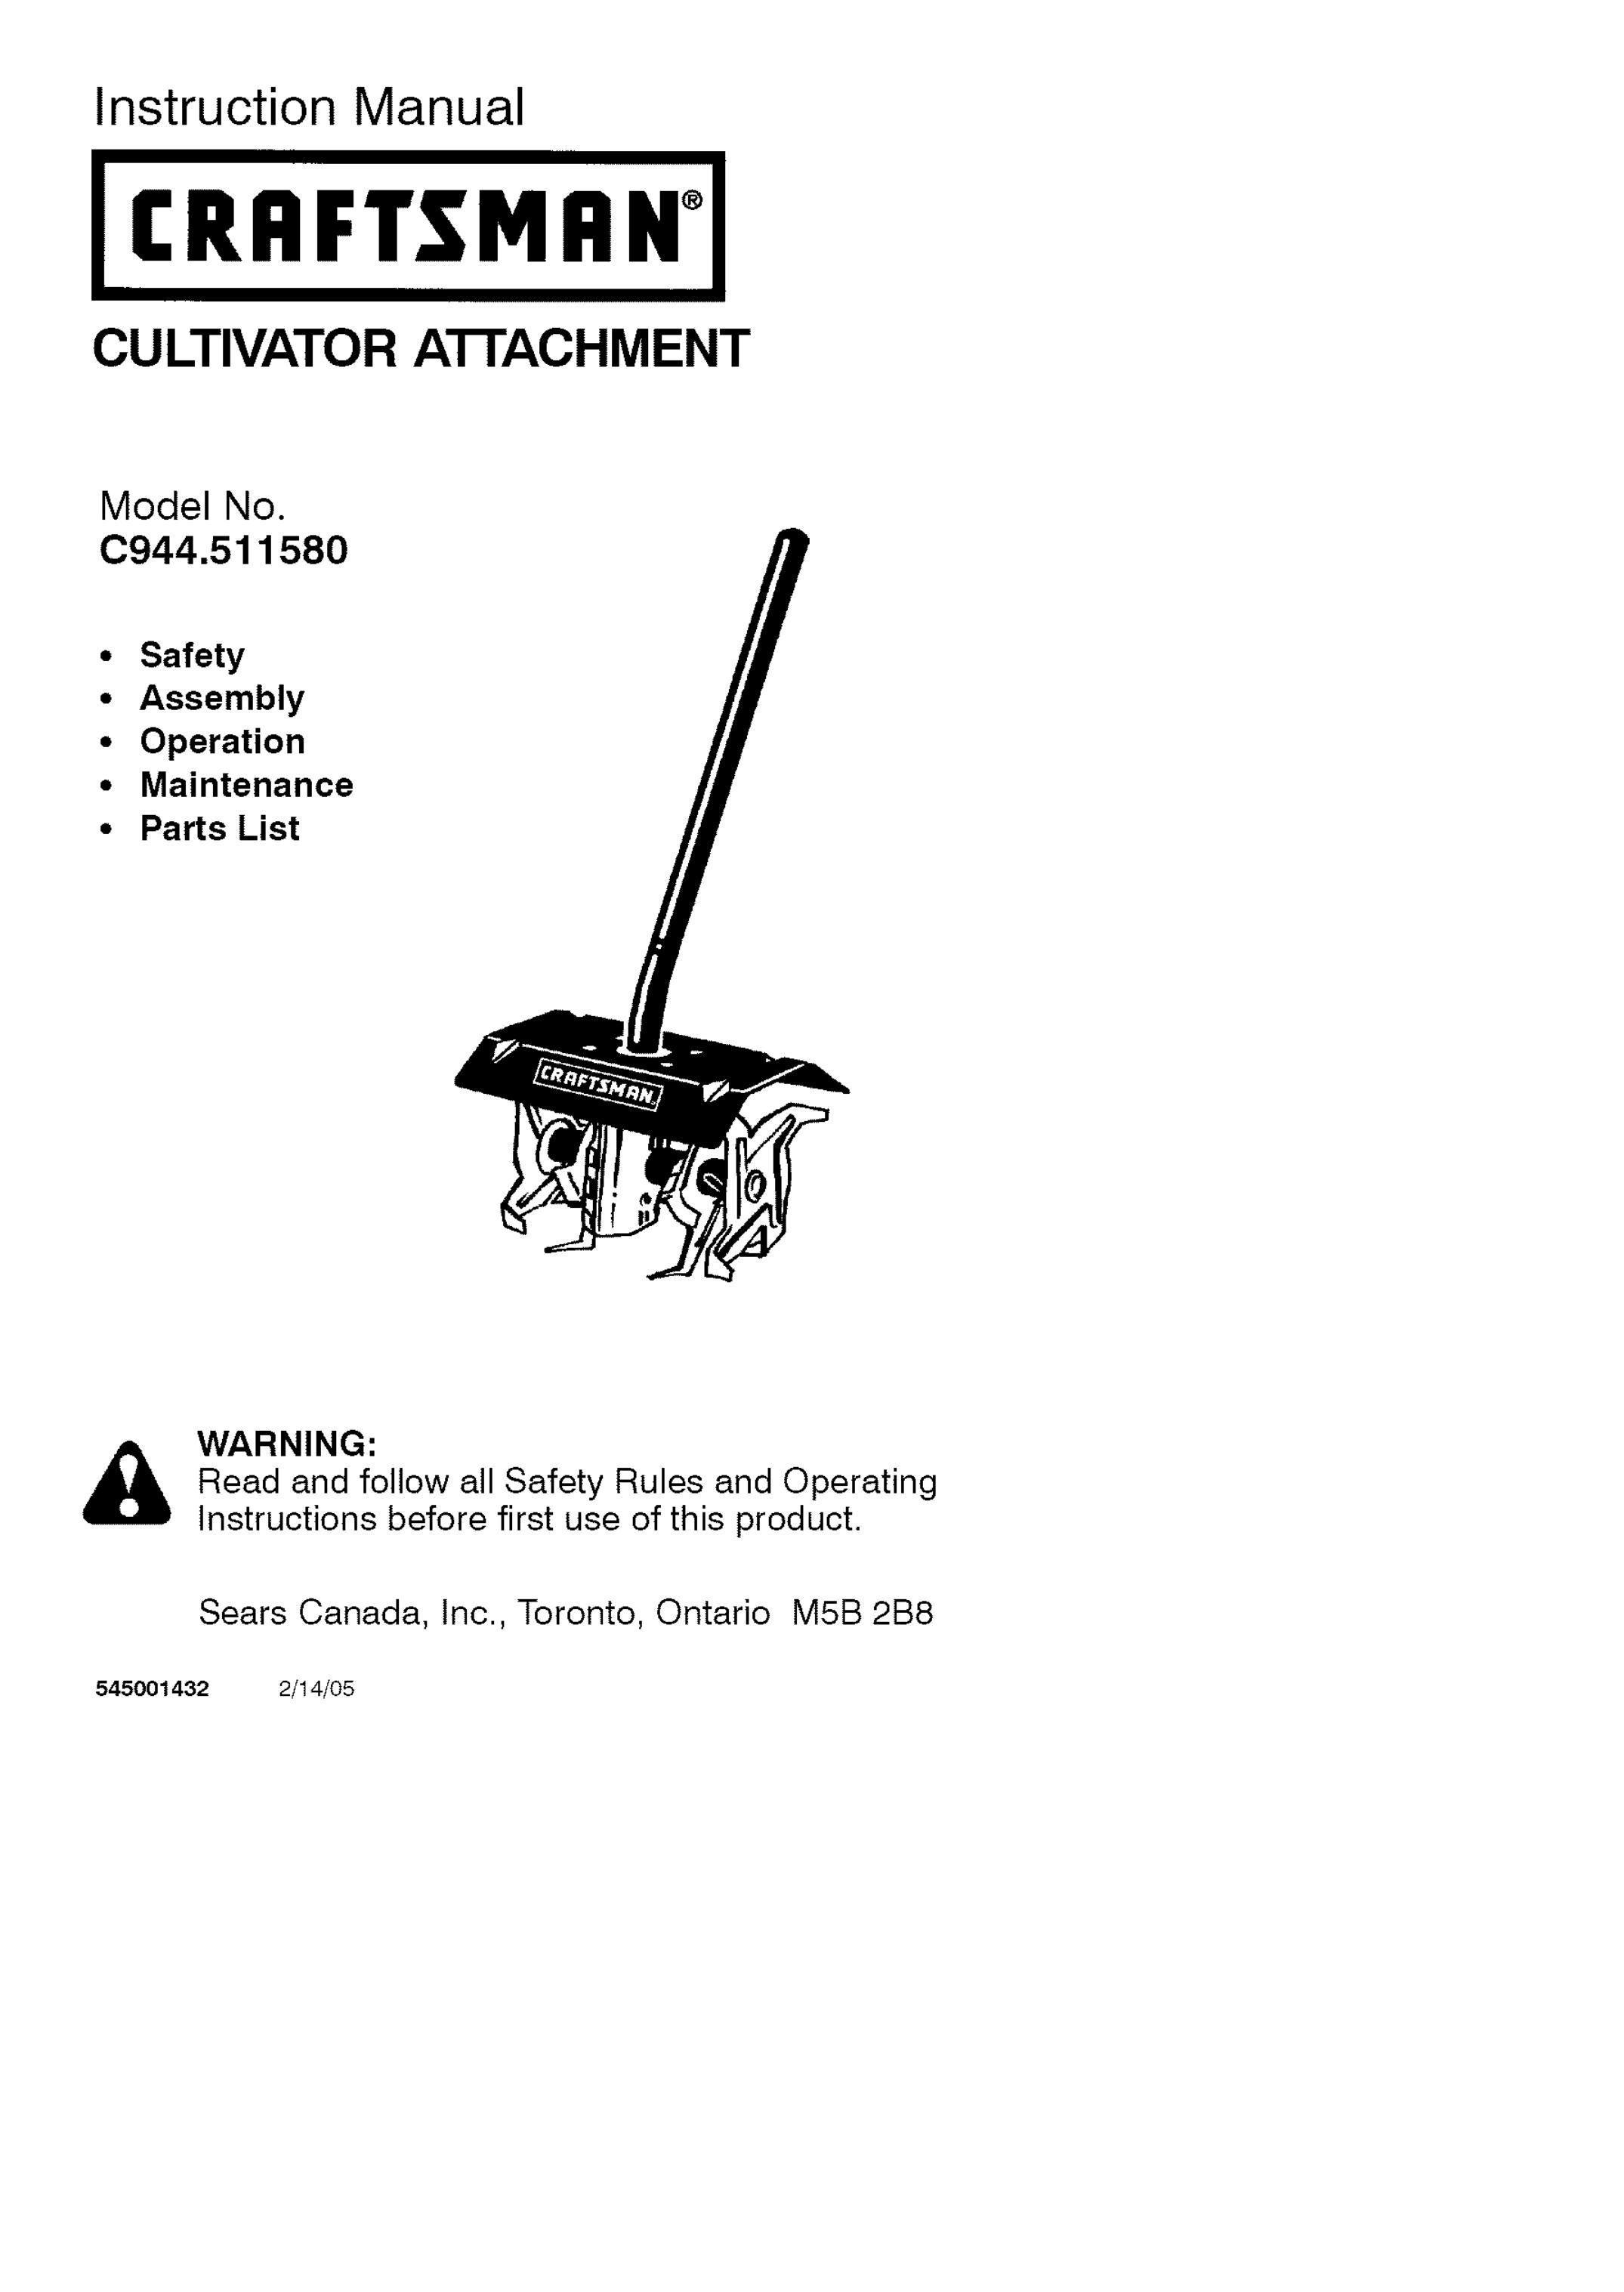 Craftsman C944.511580 Cultivator User Manual